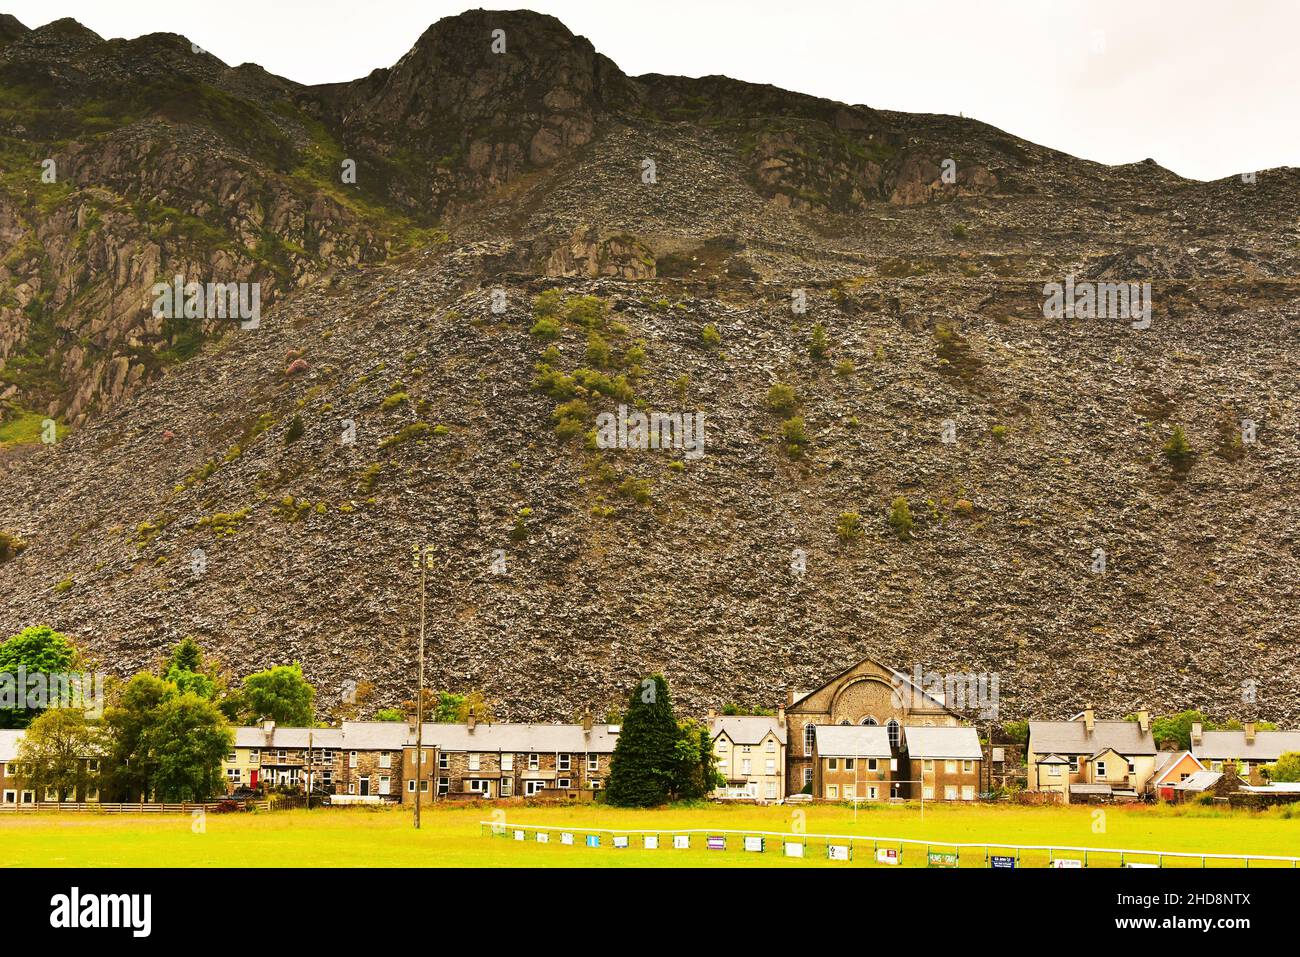 Welsh Town of Blaenau Ffestiniog with Slate Mining and Hills of Slate Debris, Snowdonia, Wales Stock Photo